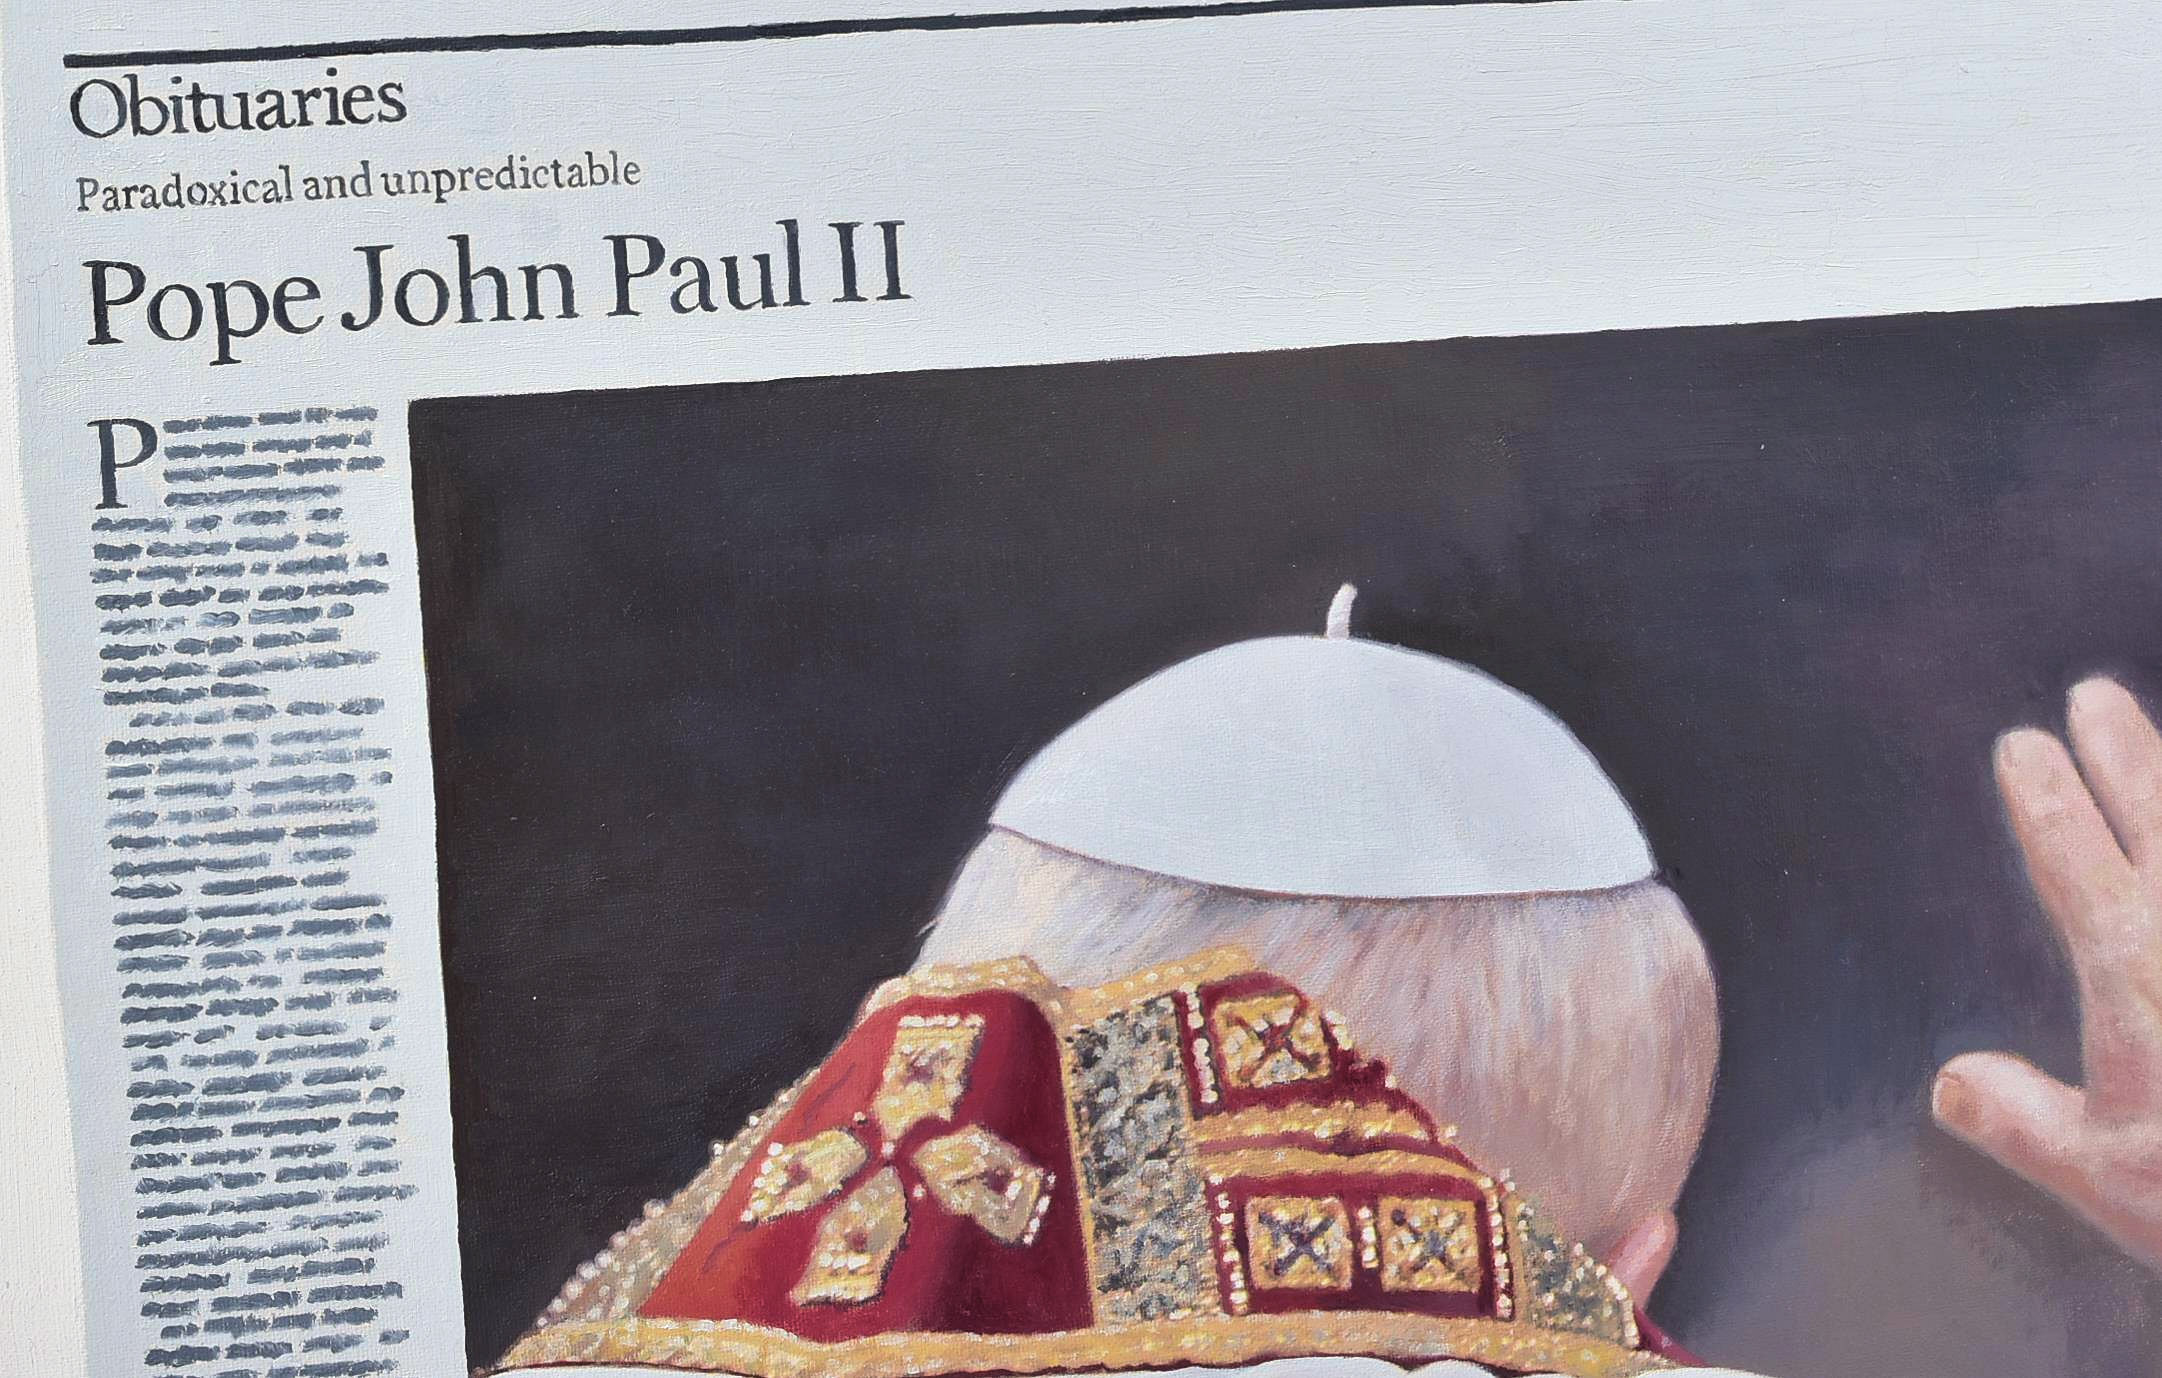 HUGH MENDES (B.1955) - OBITUARIES POPE JOHN PAUL II - 2006 - Image 3 of 6